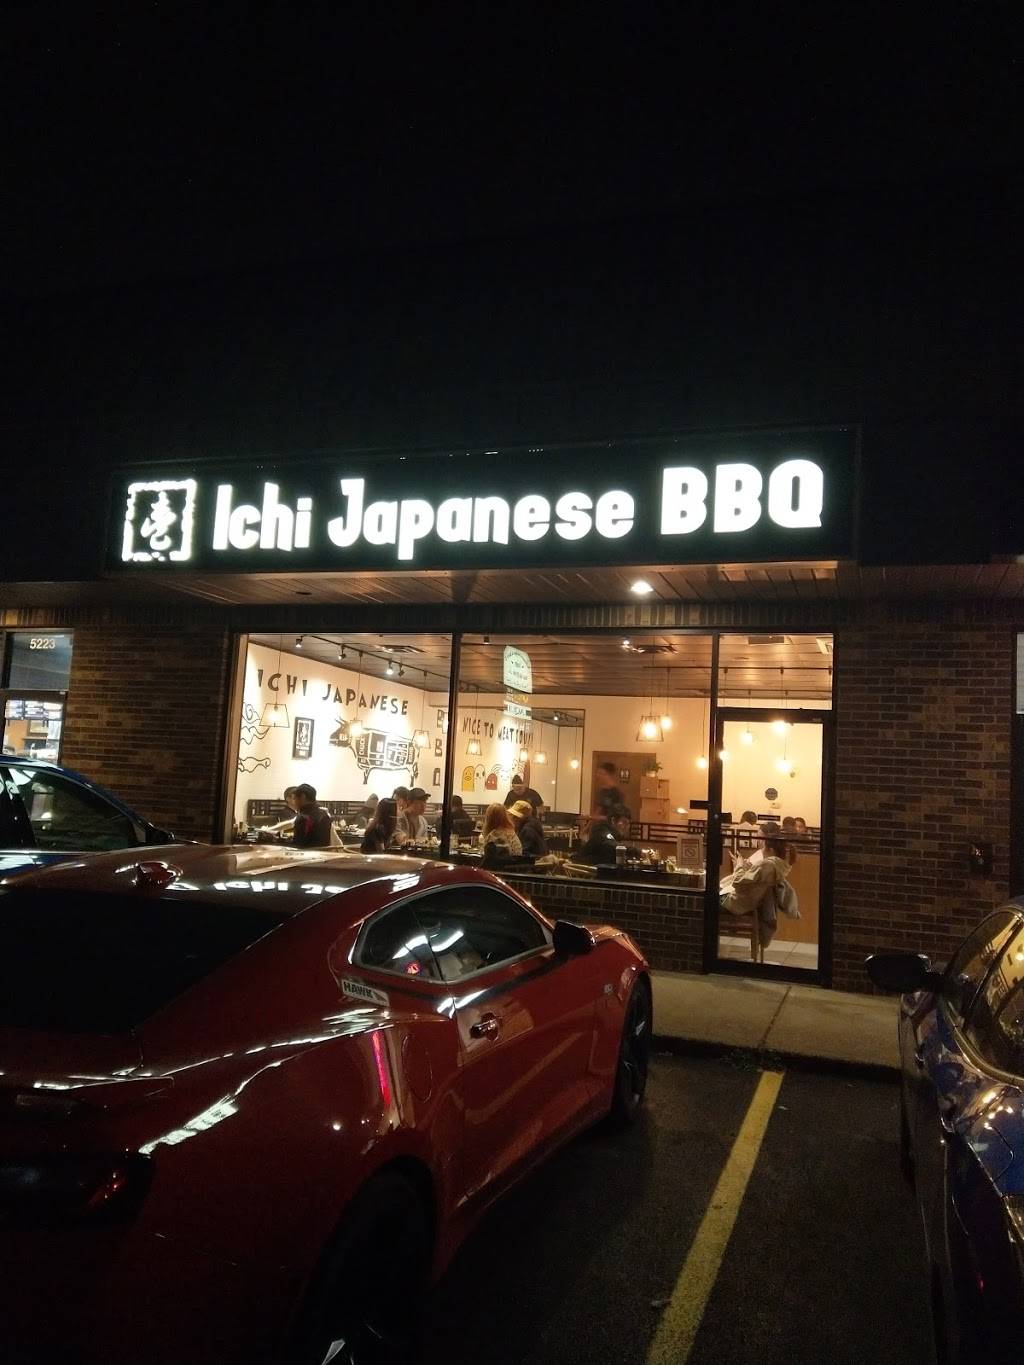 japanese restaurants columbus ohio